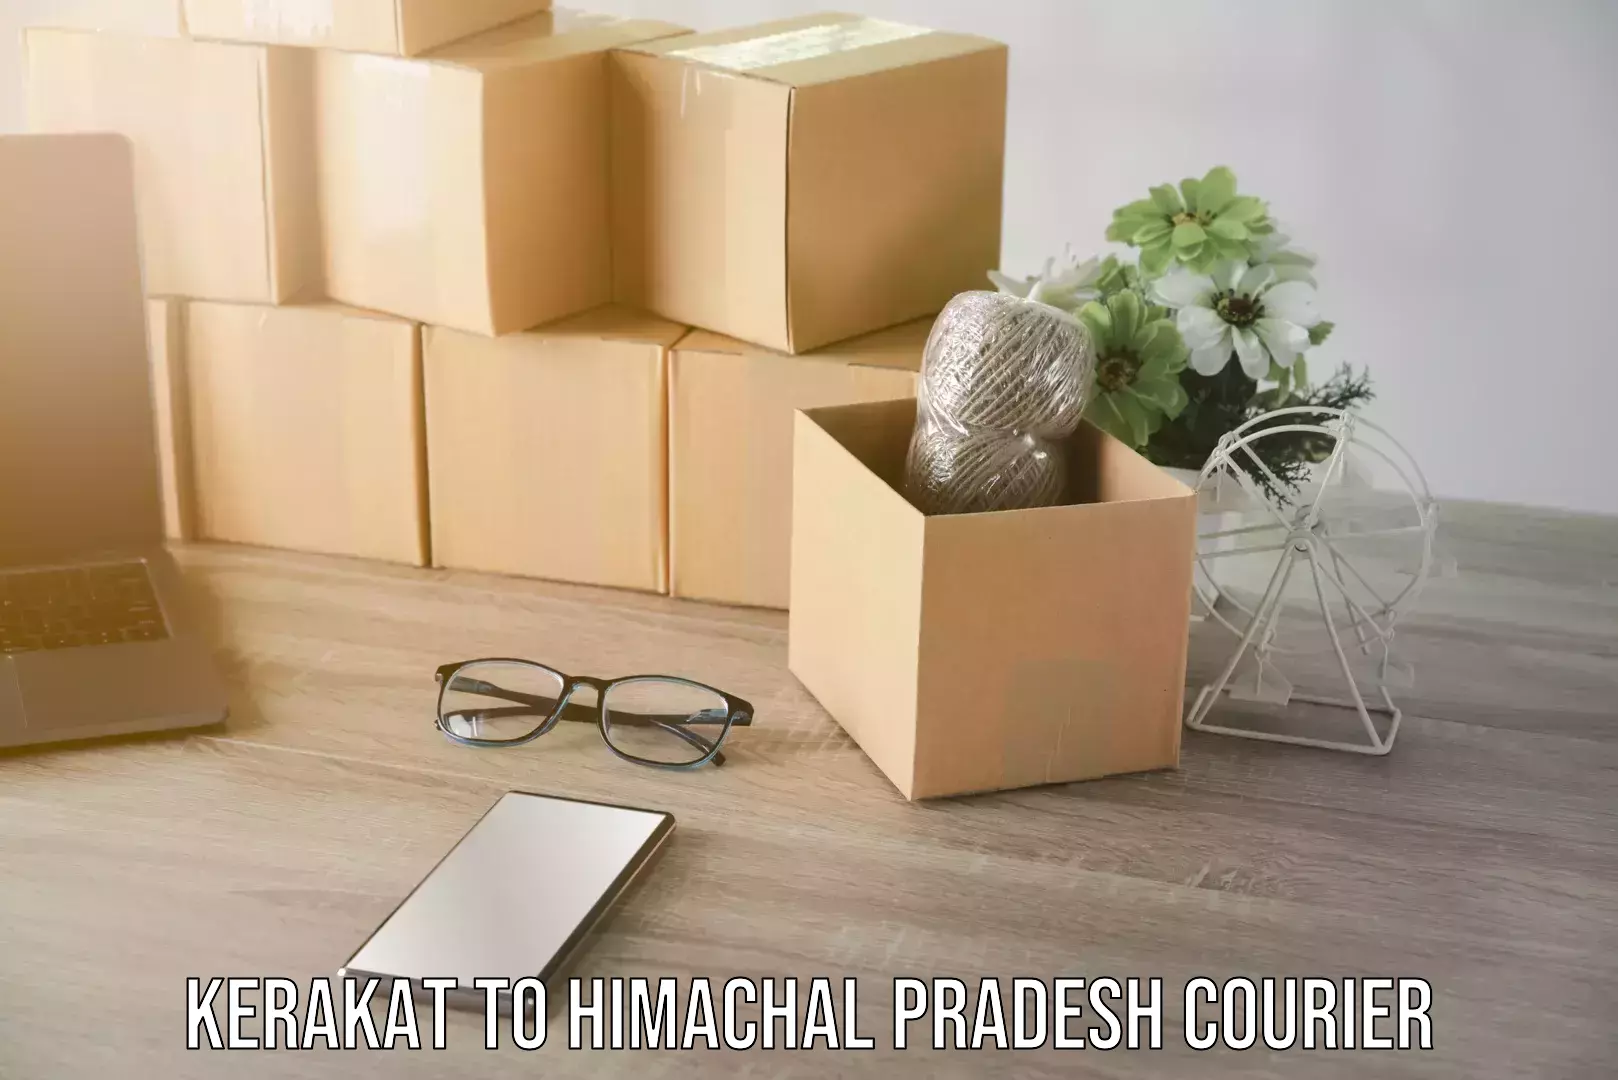 Professional moving company Kerakat to Himachal Pradesh